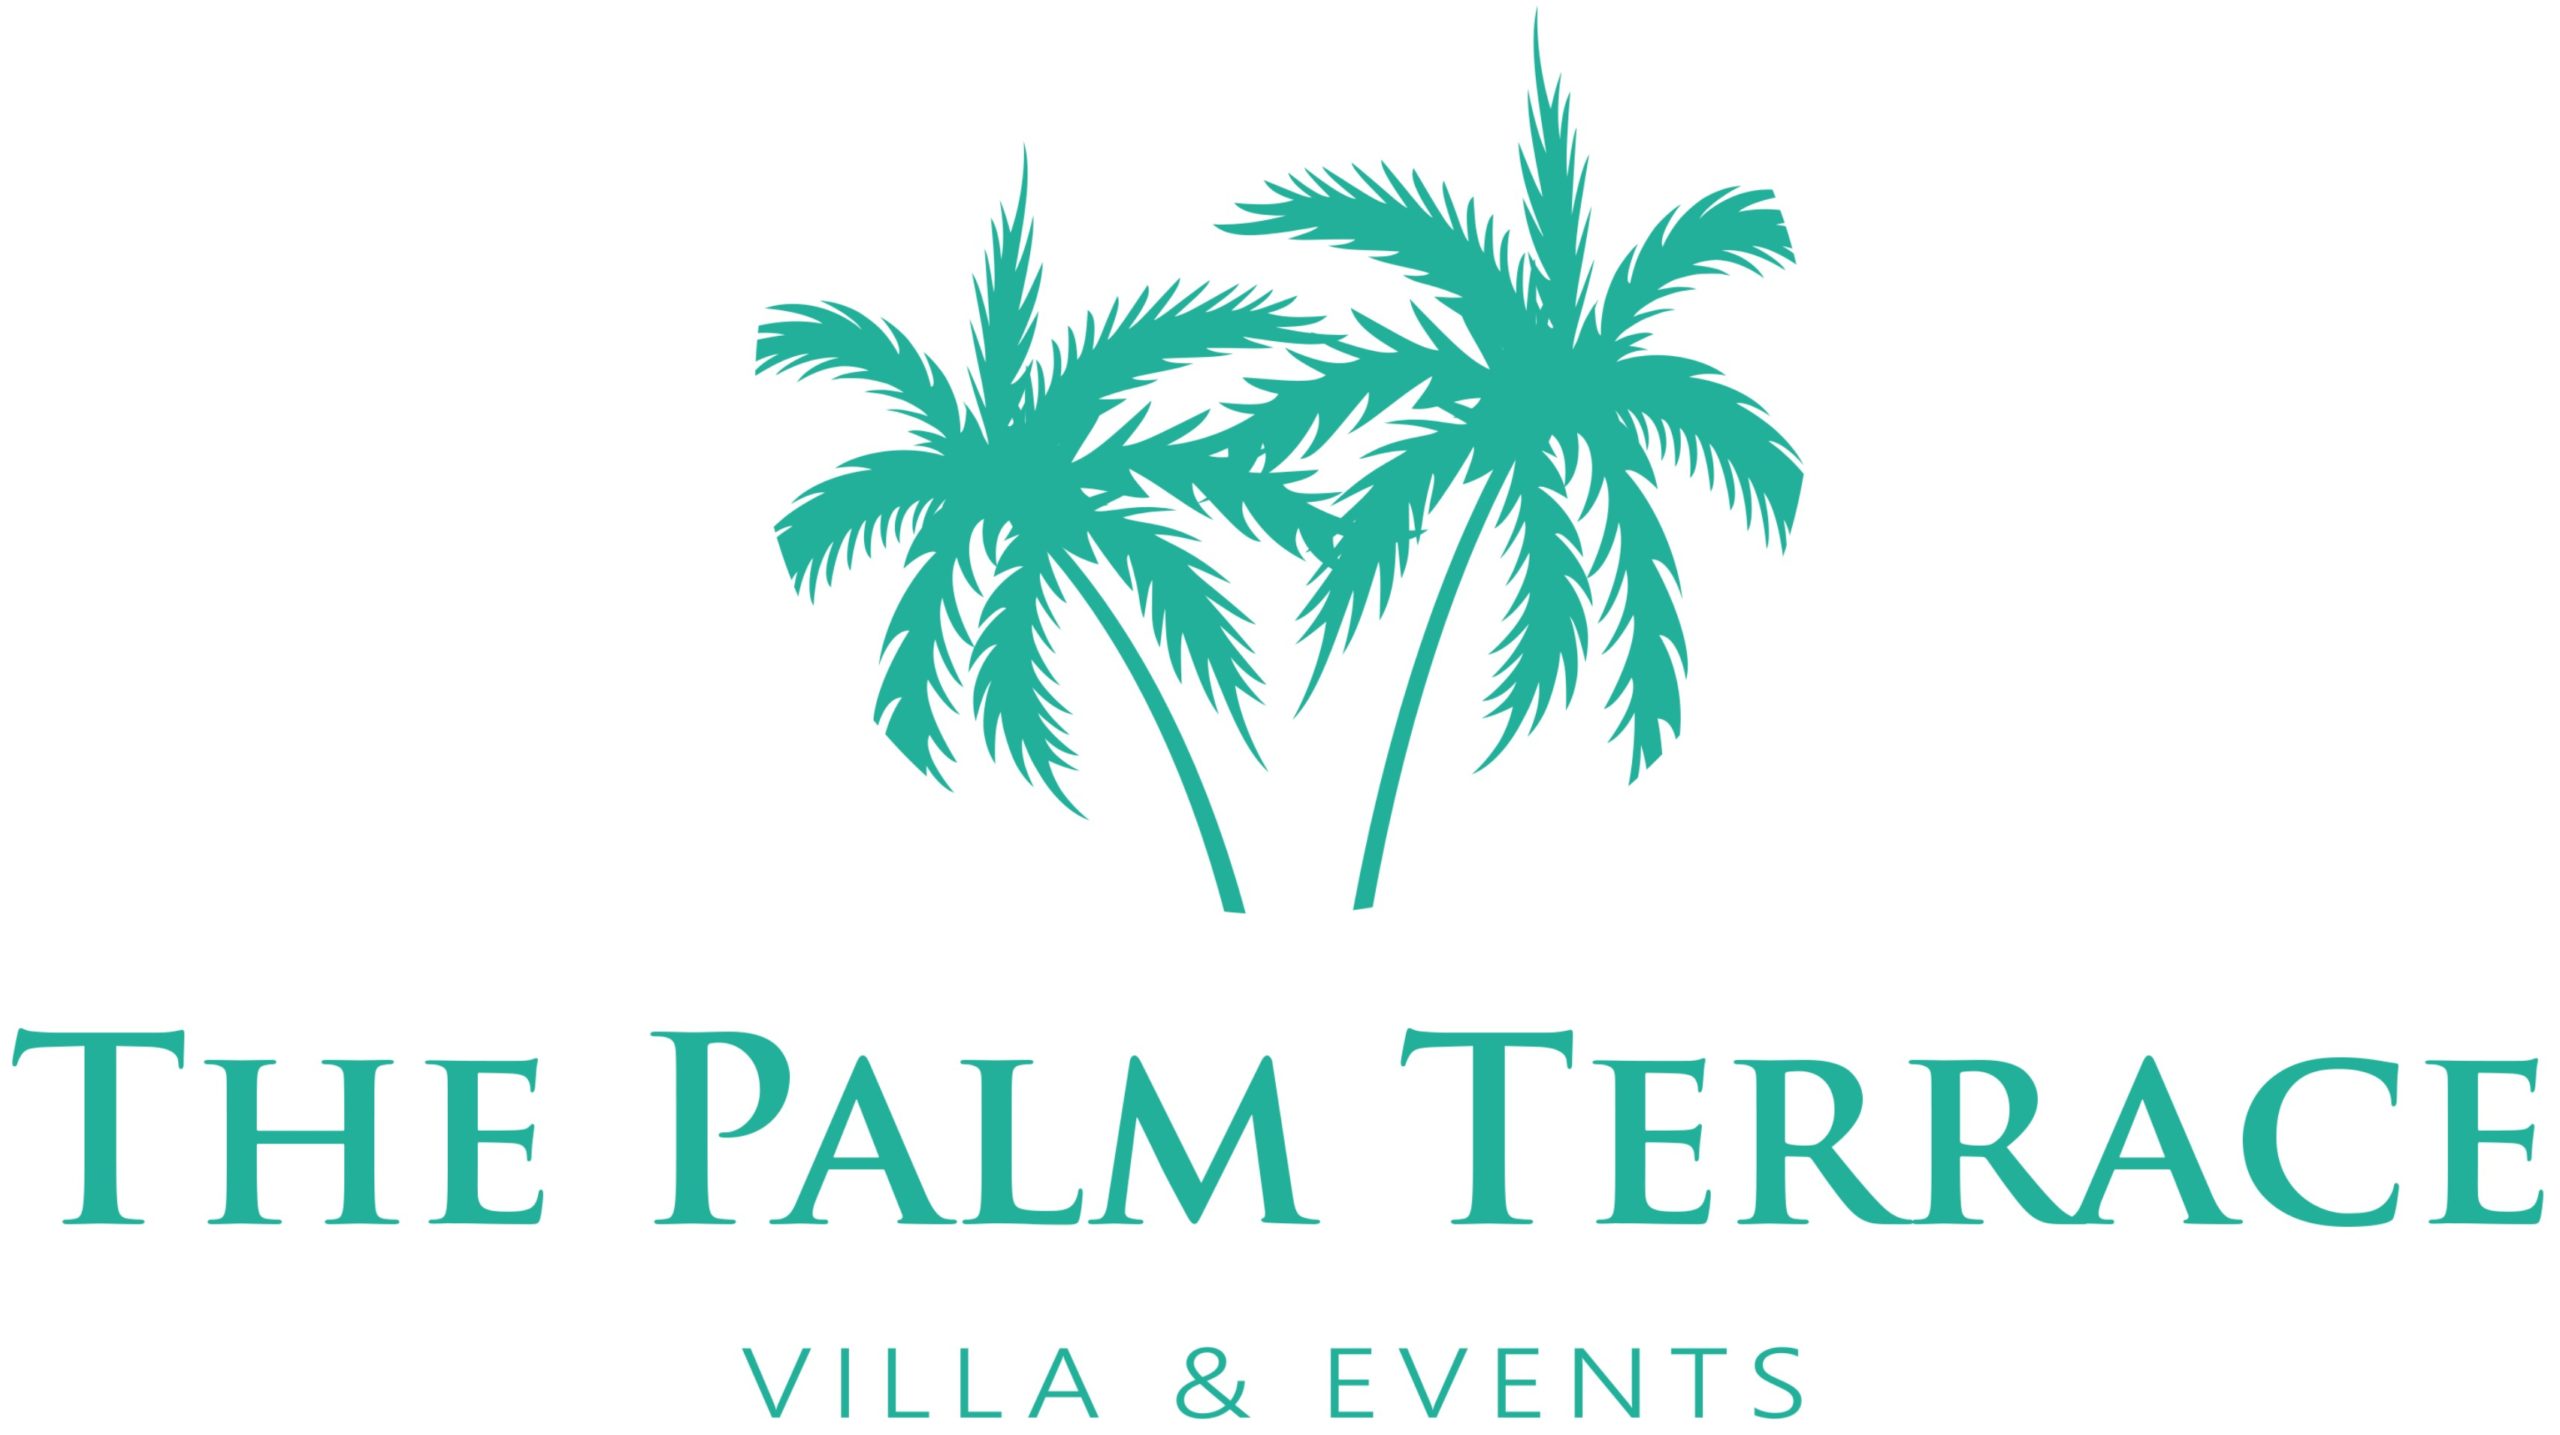 The Palm Terrace